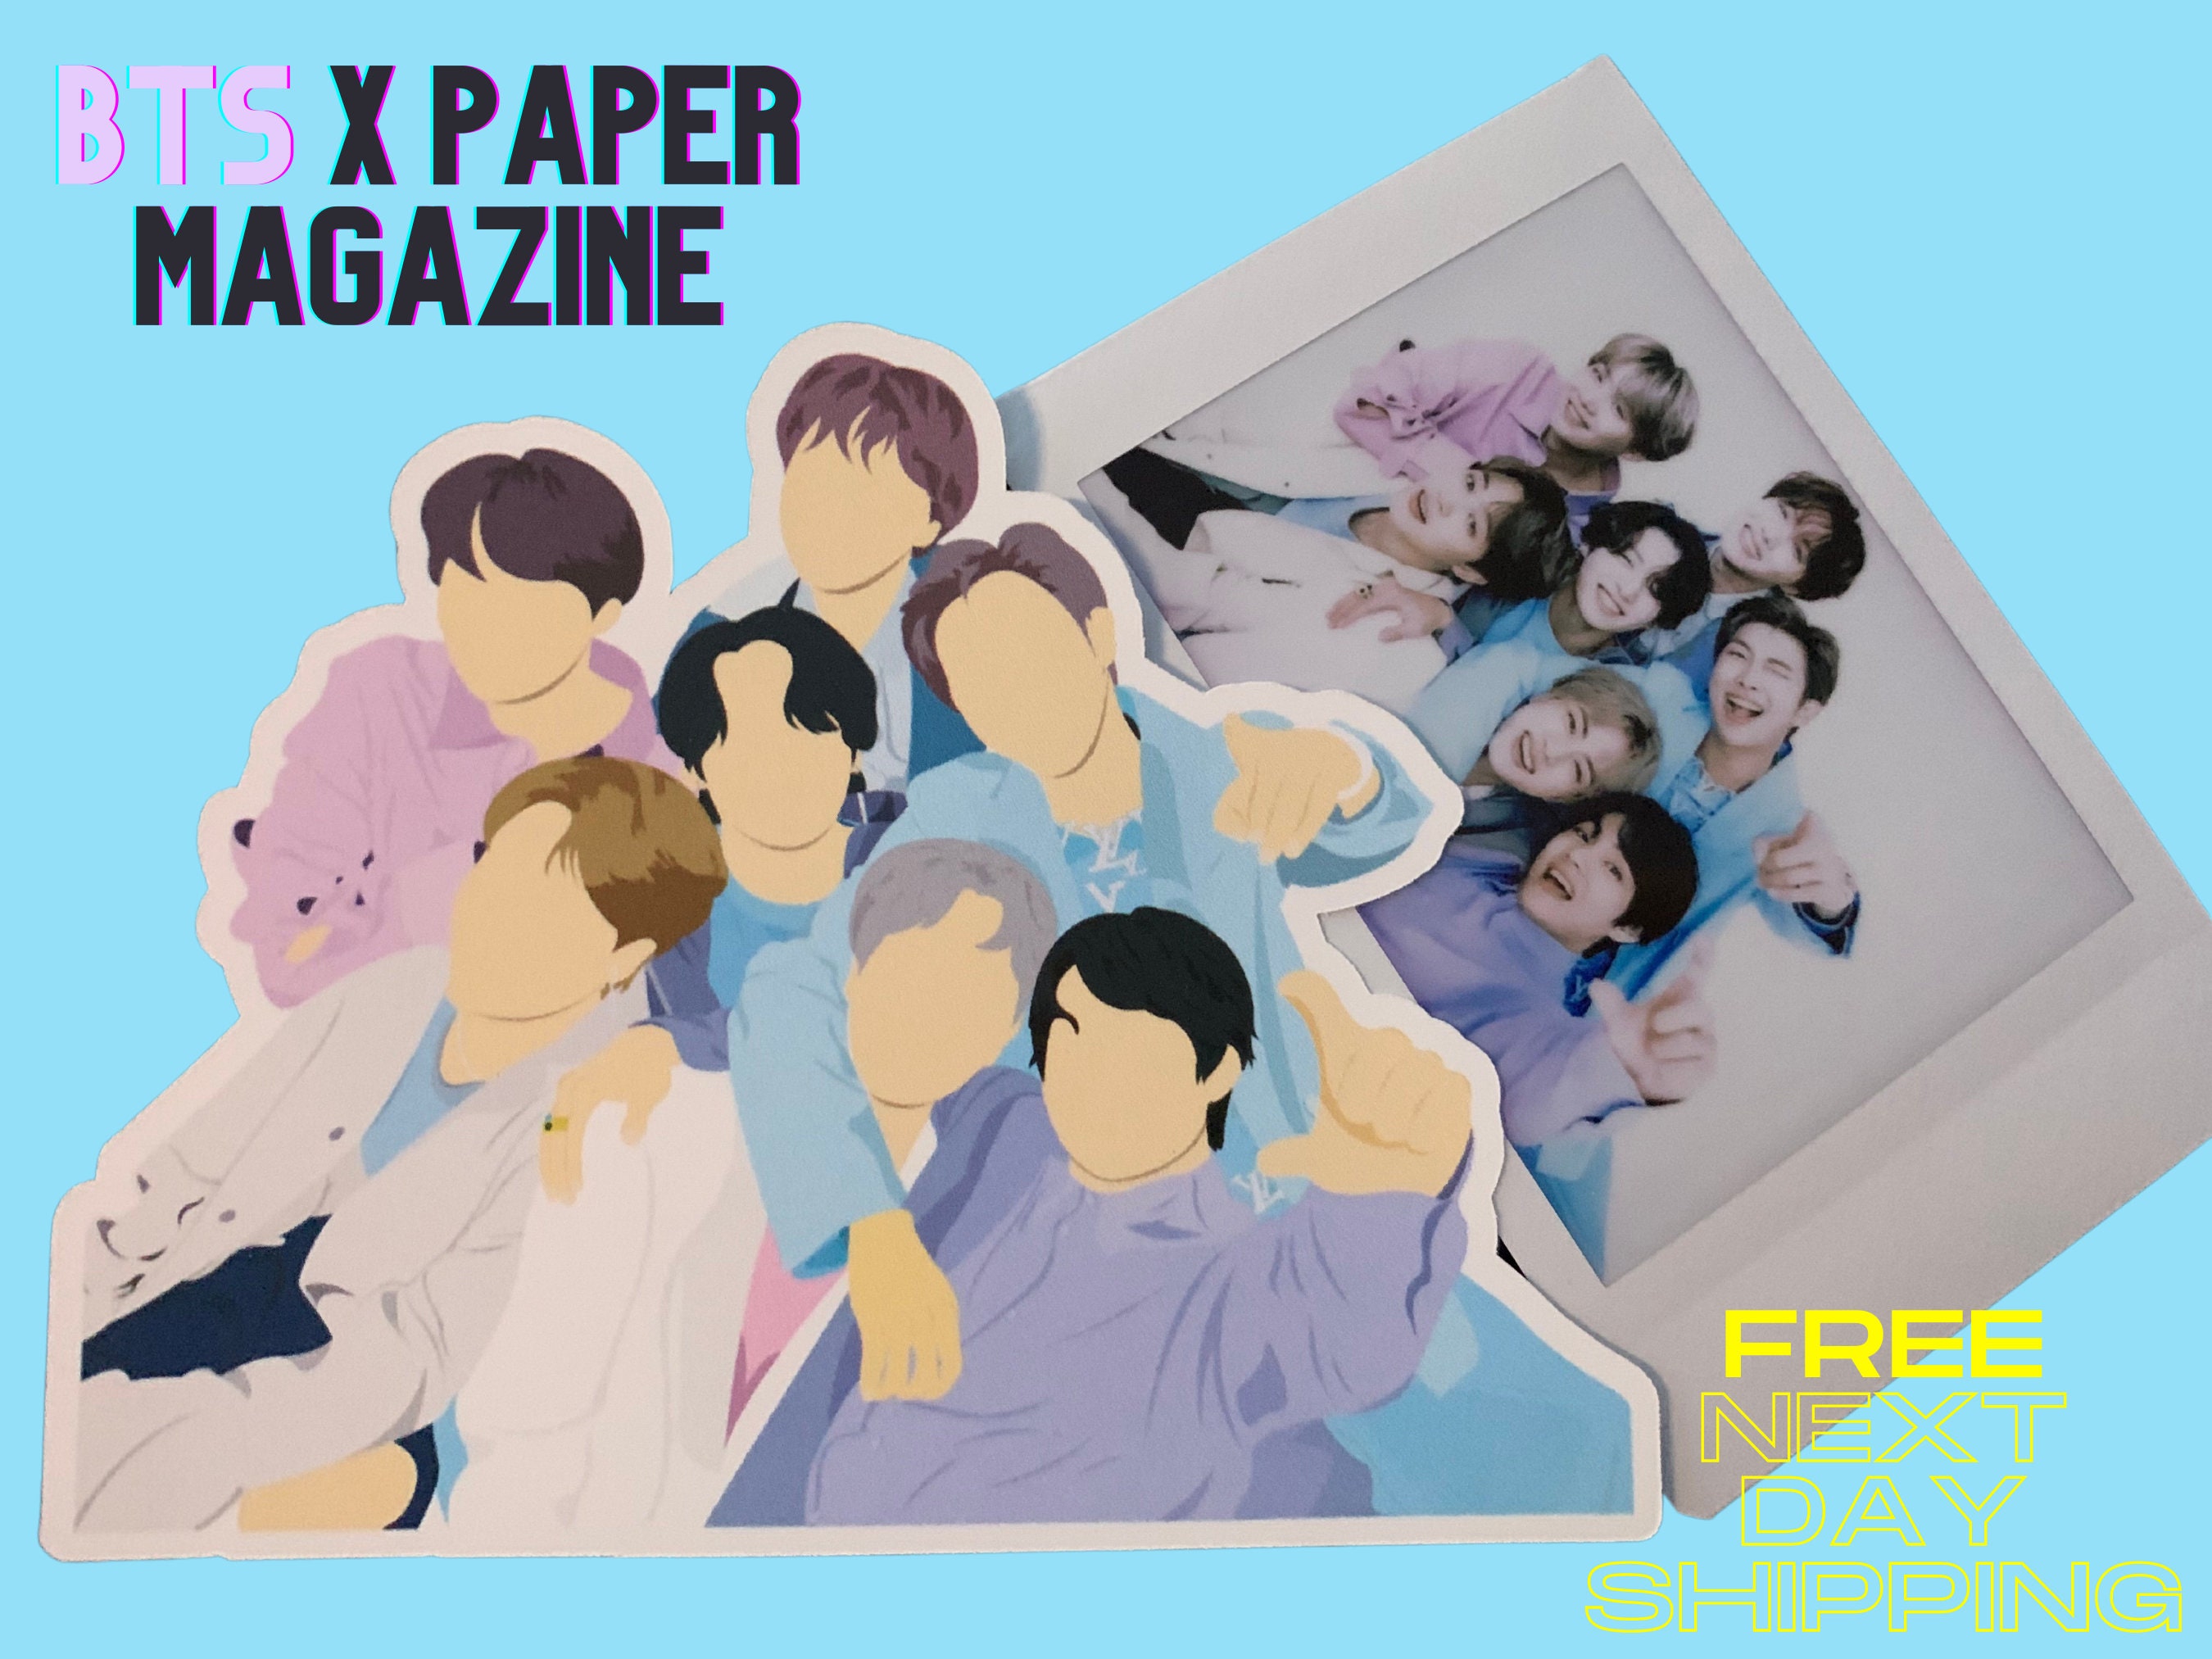 BTS LV AMBASSADOR Sticker Iconic Paper Magazine Cover 